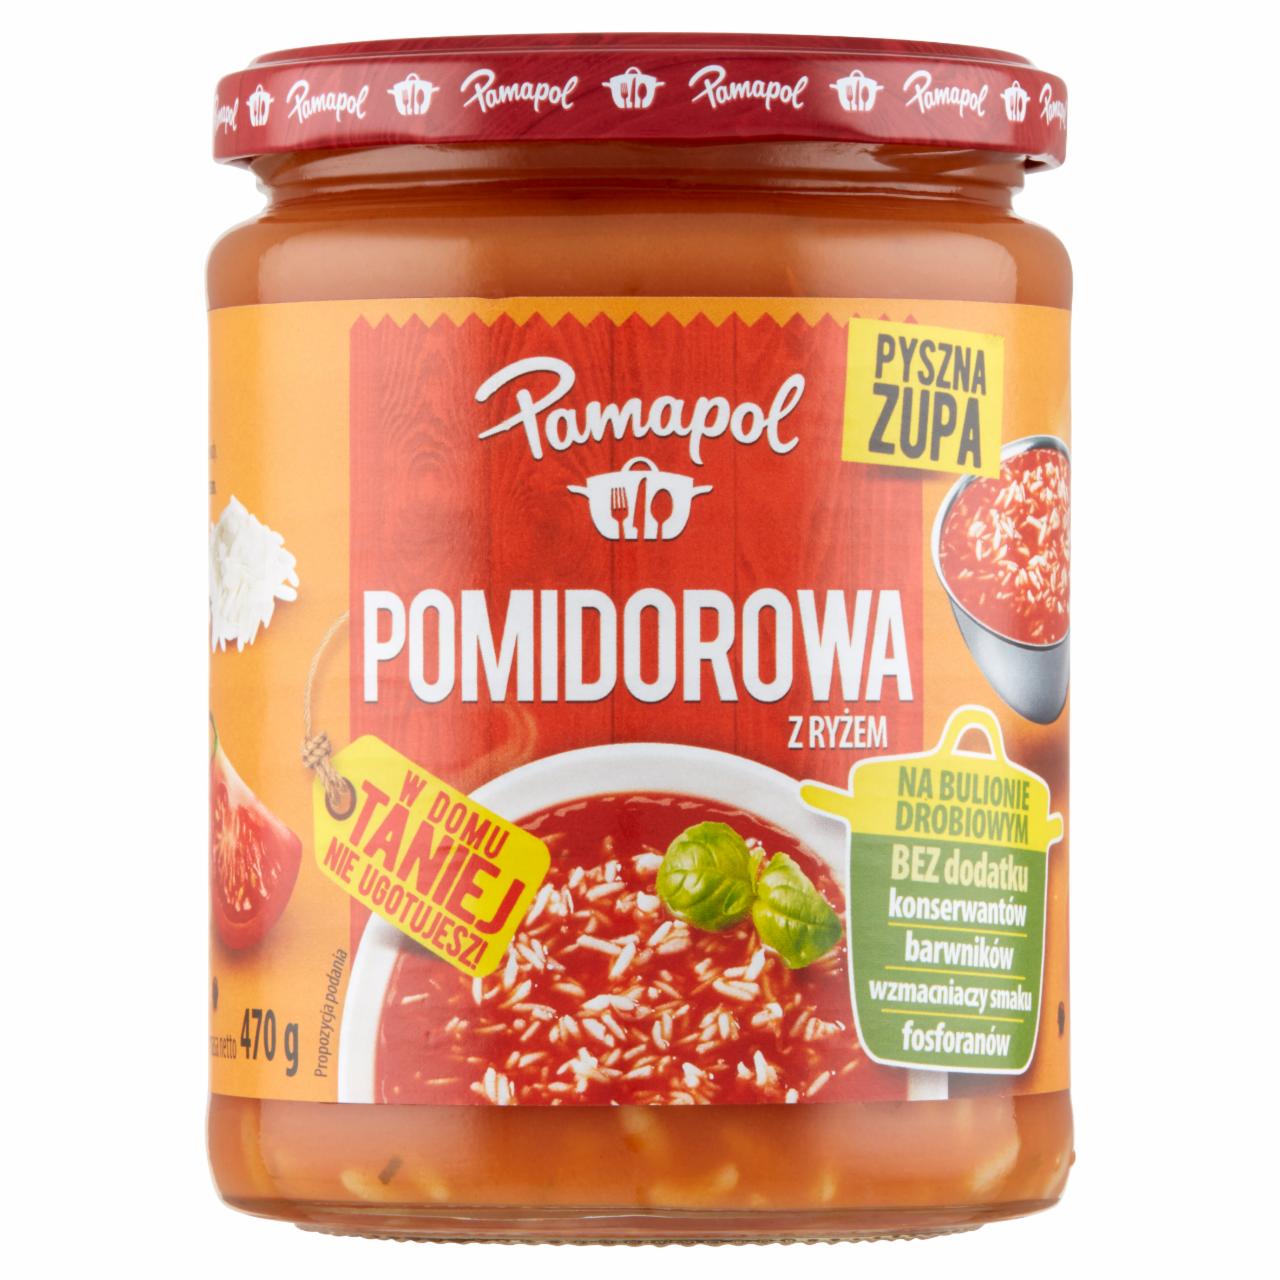 Photo - Pamapol Tomato Soup with Rice 470 g